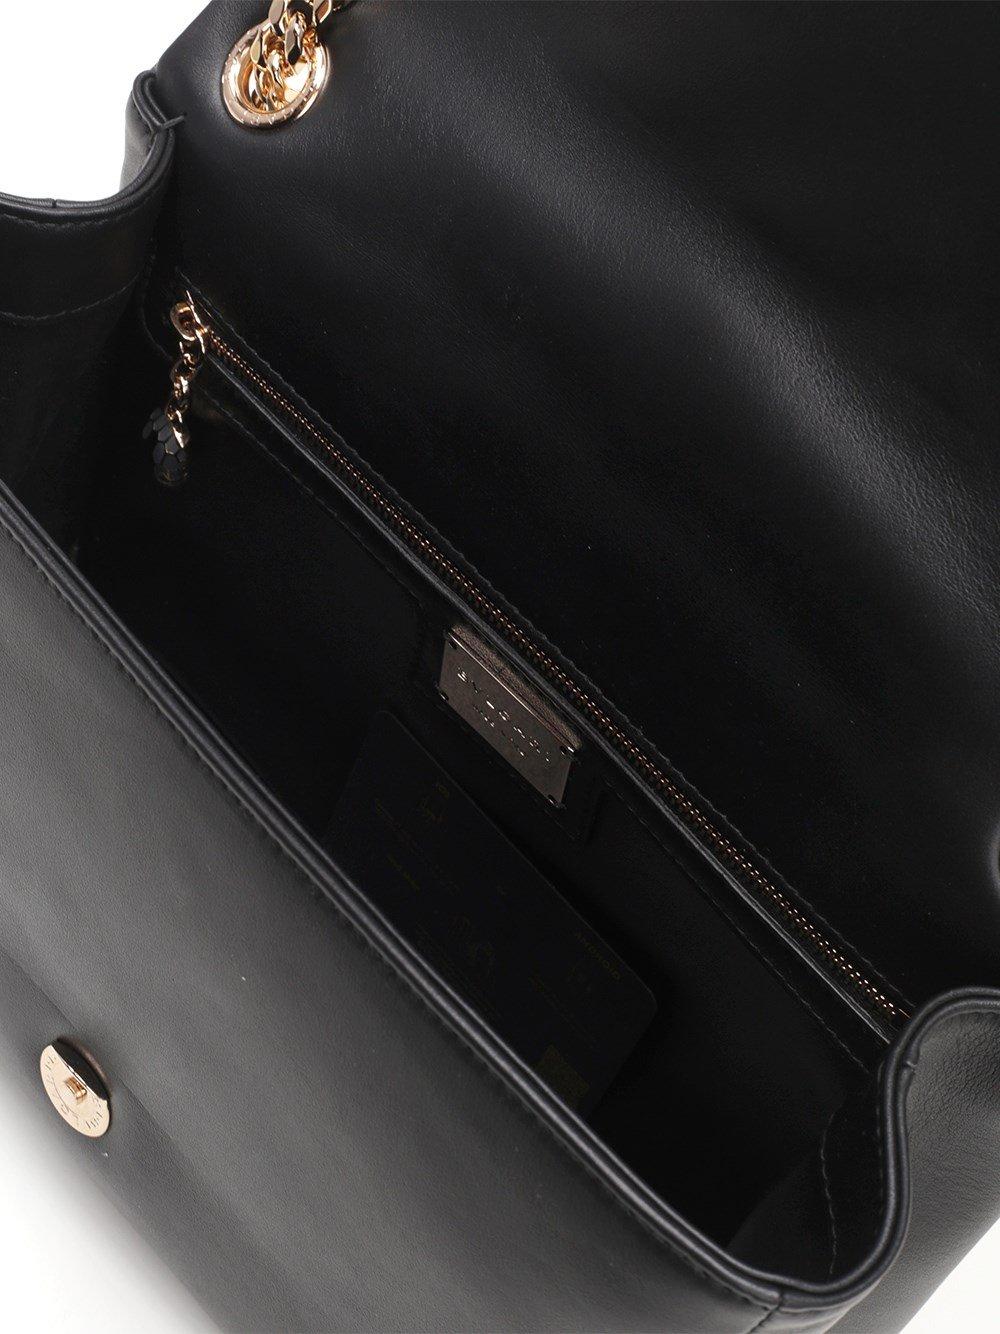 BVLGARI SERPENTI CABOCHON SHOULDER BAG black color.NWT.100% authentic.BEST  PRICE